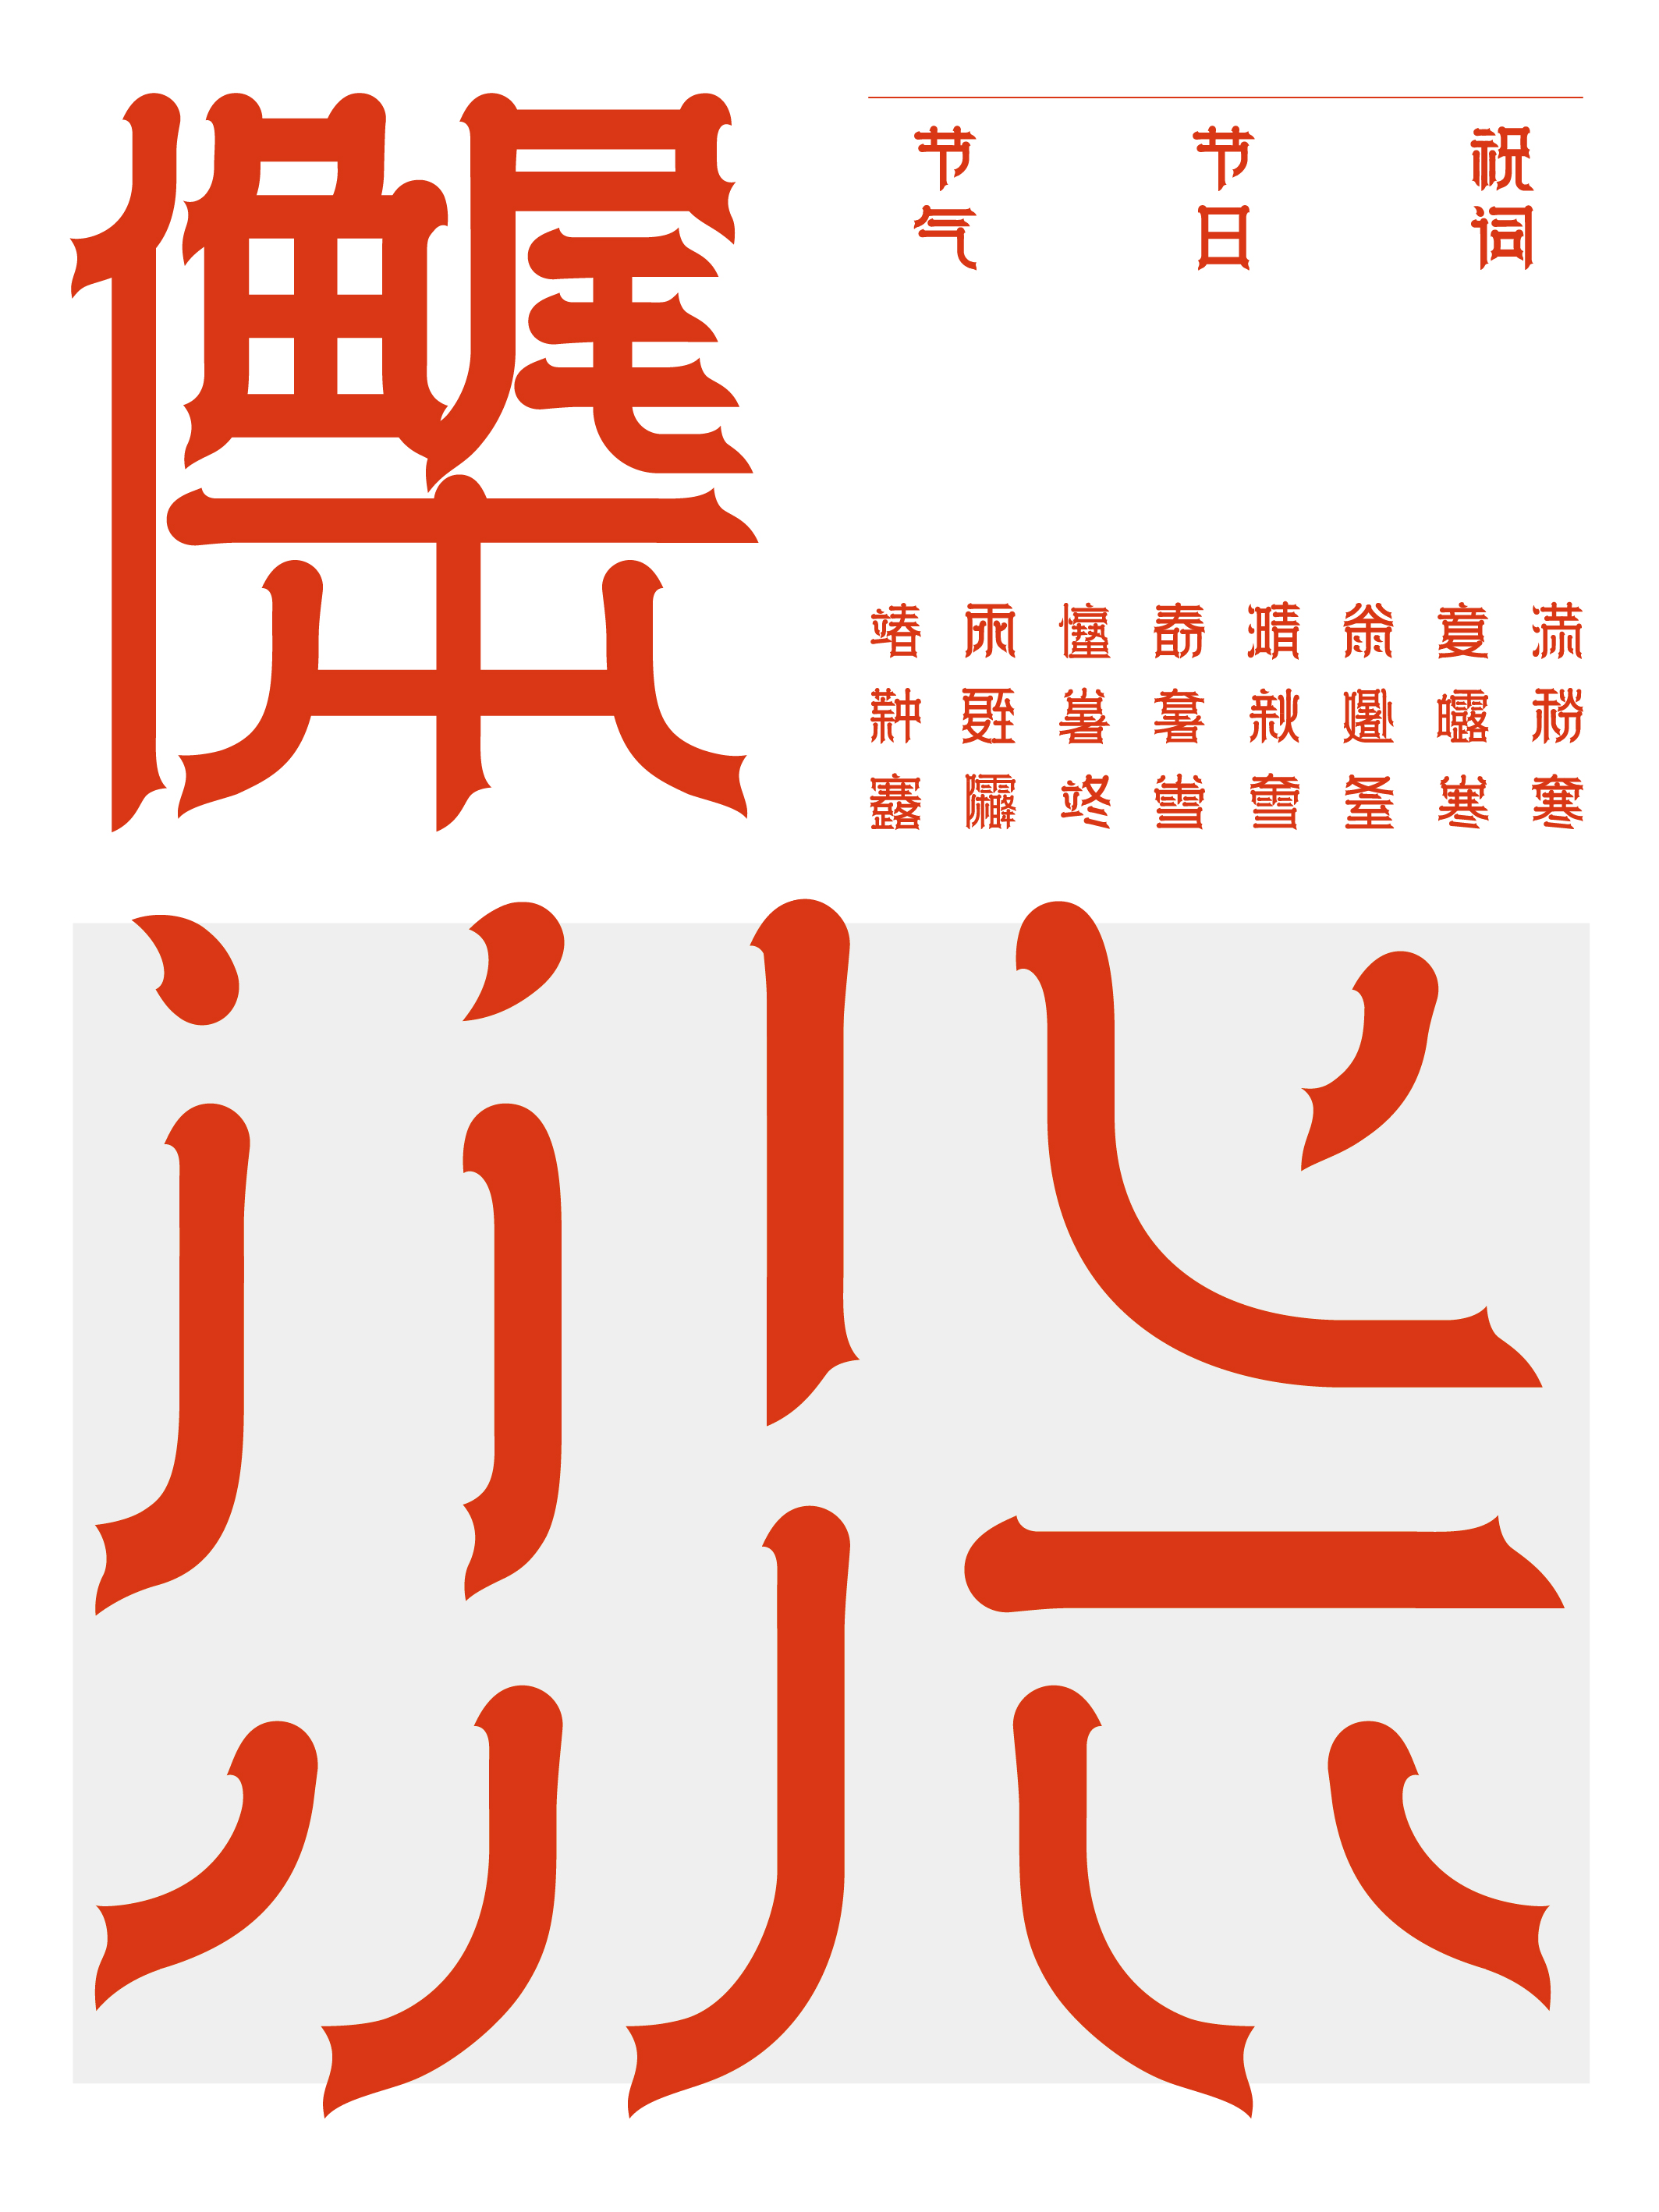 ZD fishtail font